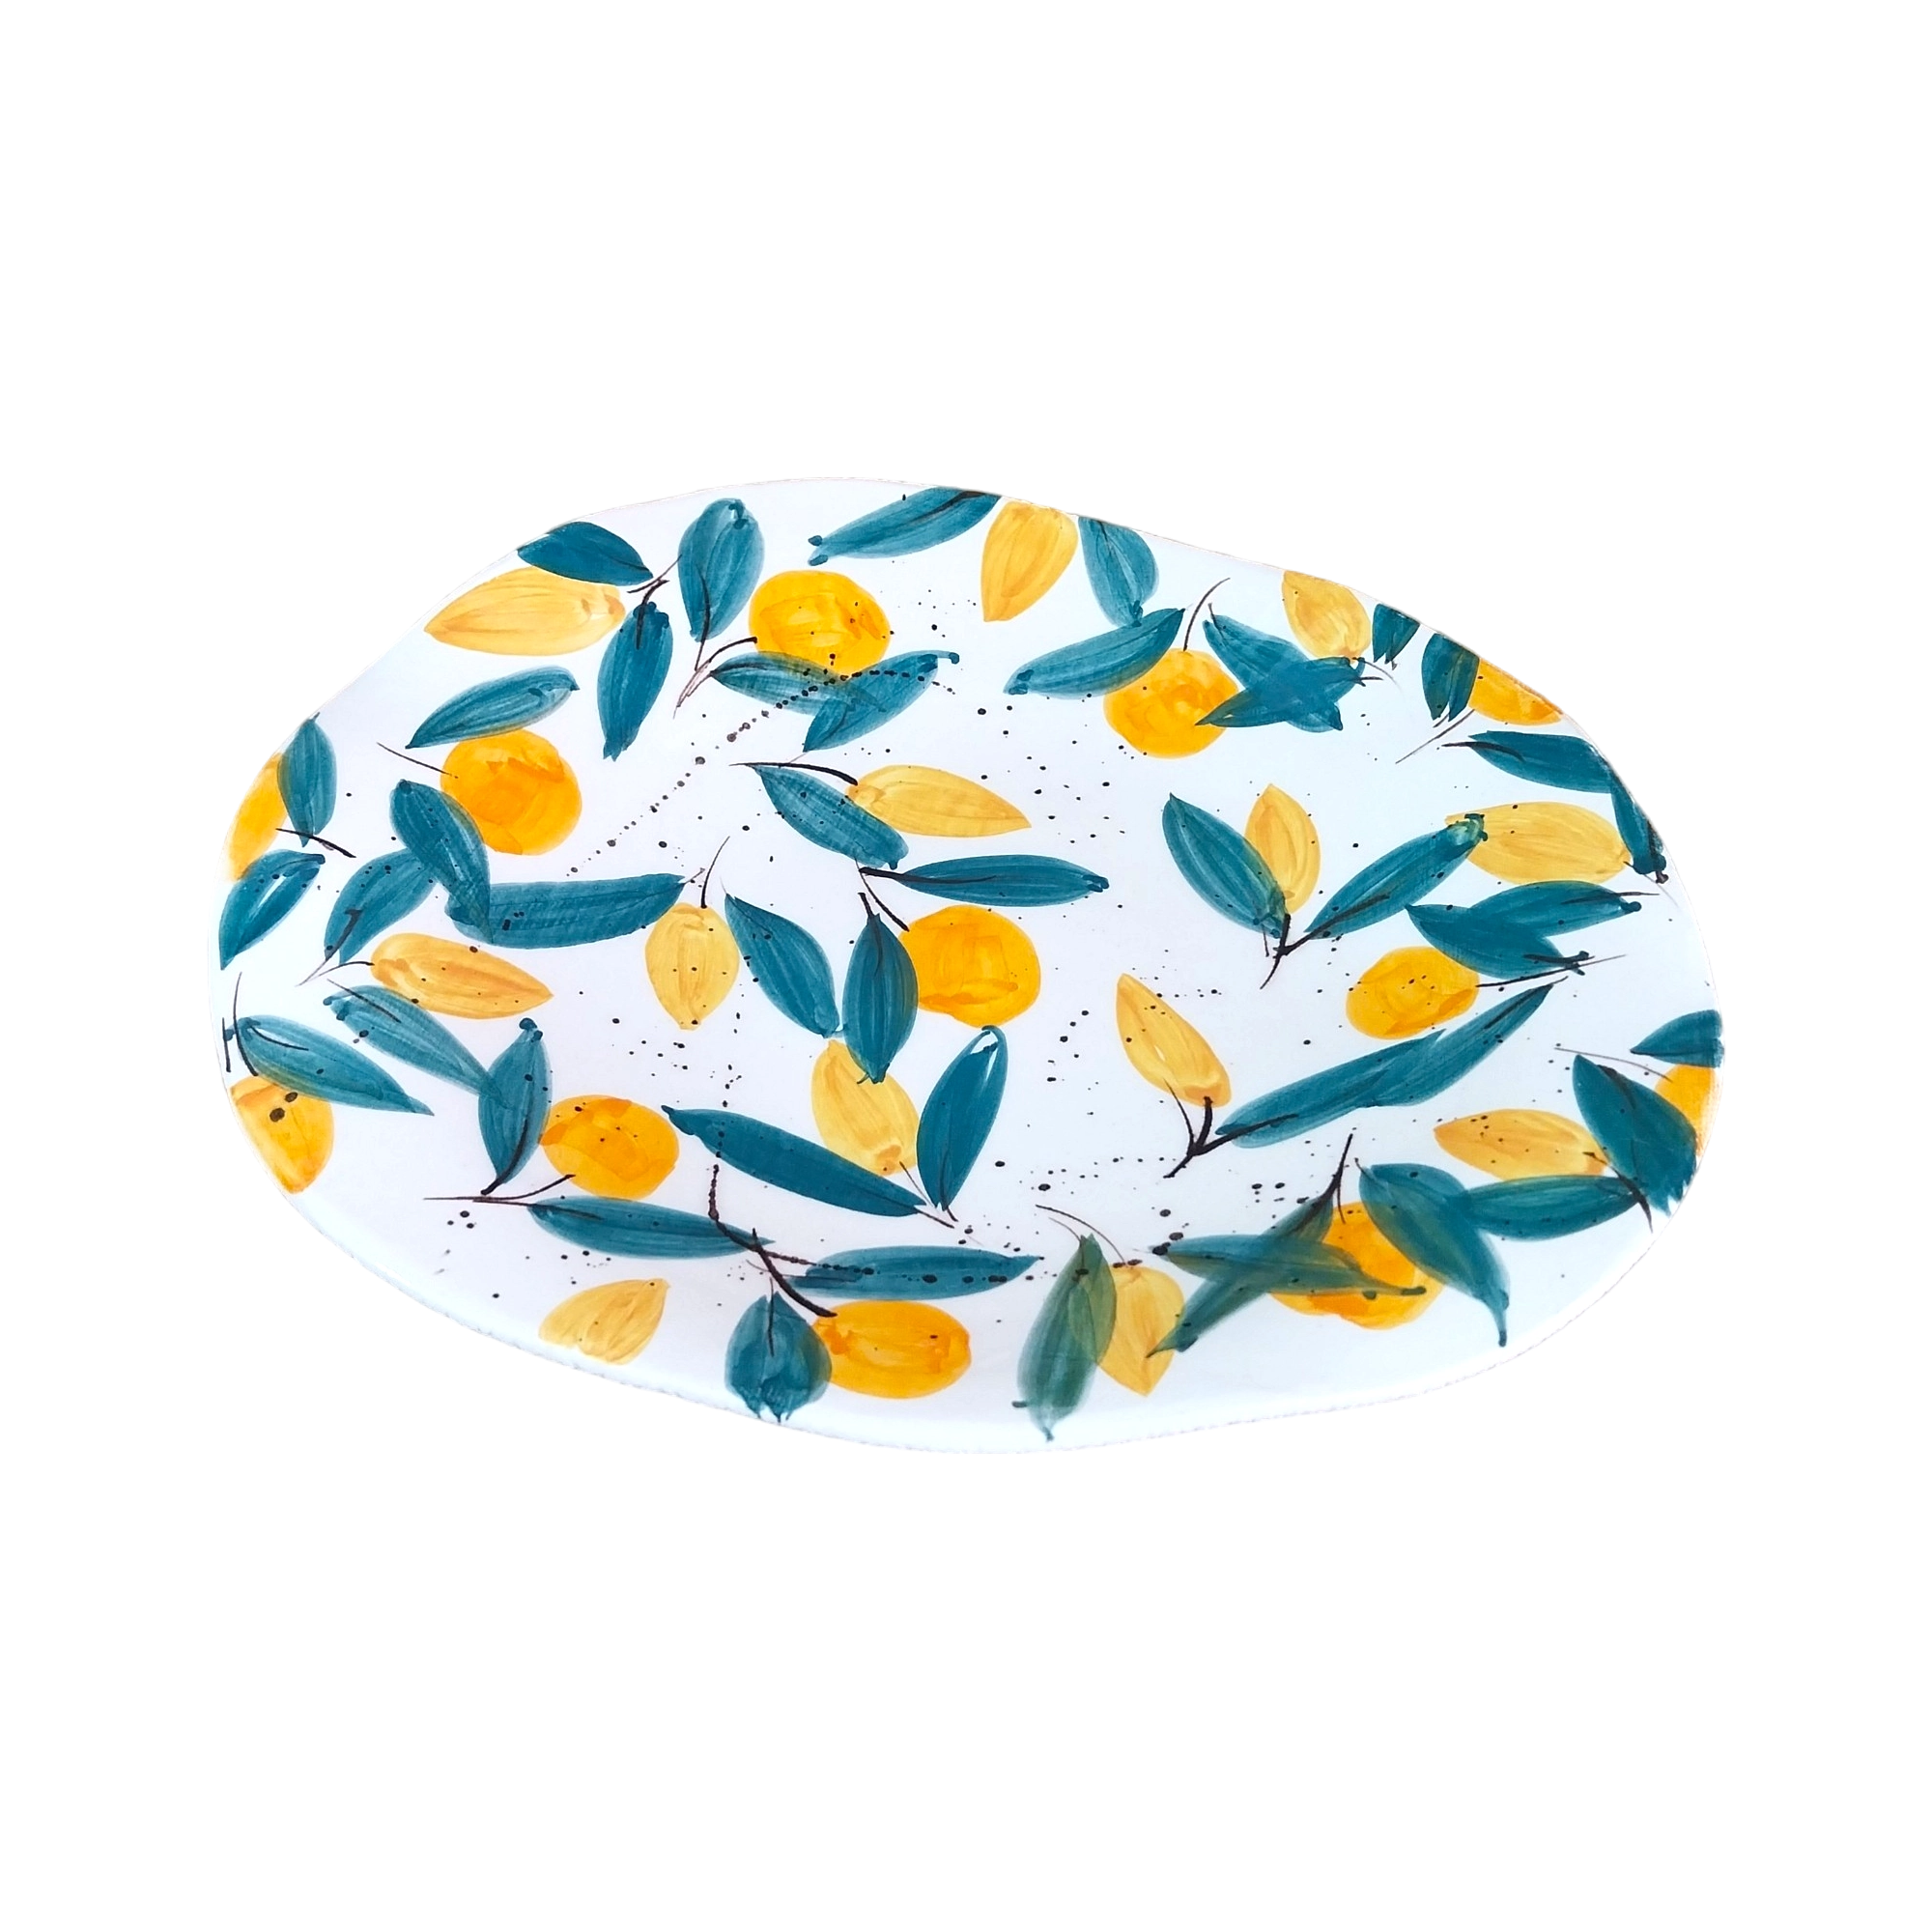 Irregular Ceramic Plate Decorated with Small Lemons and Mandarins